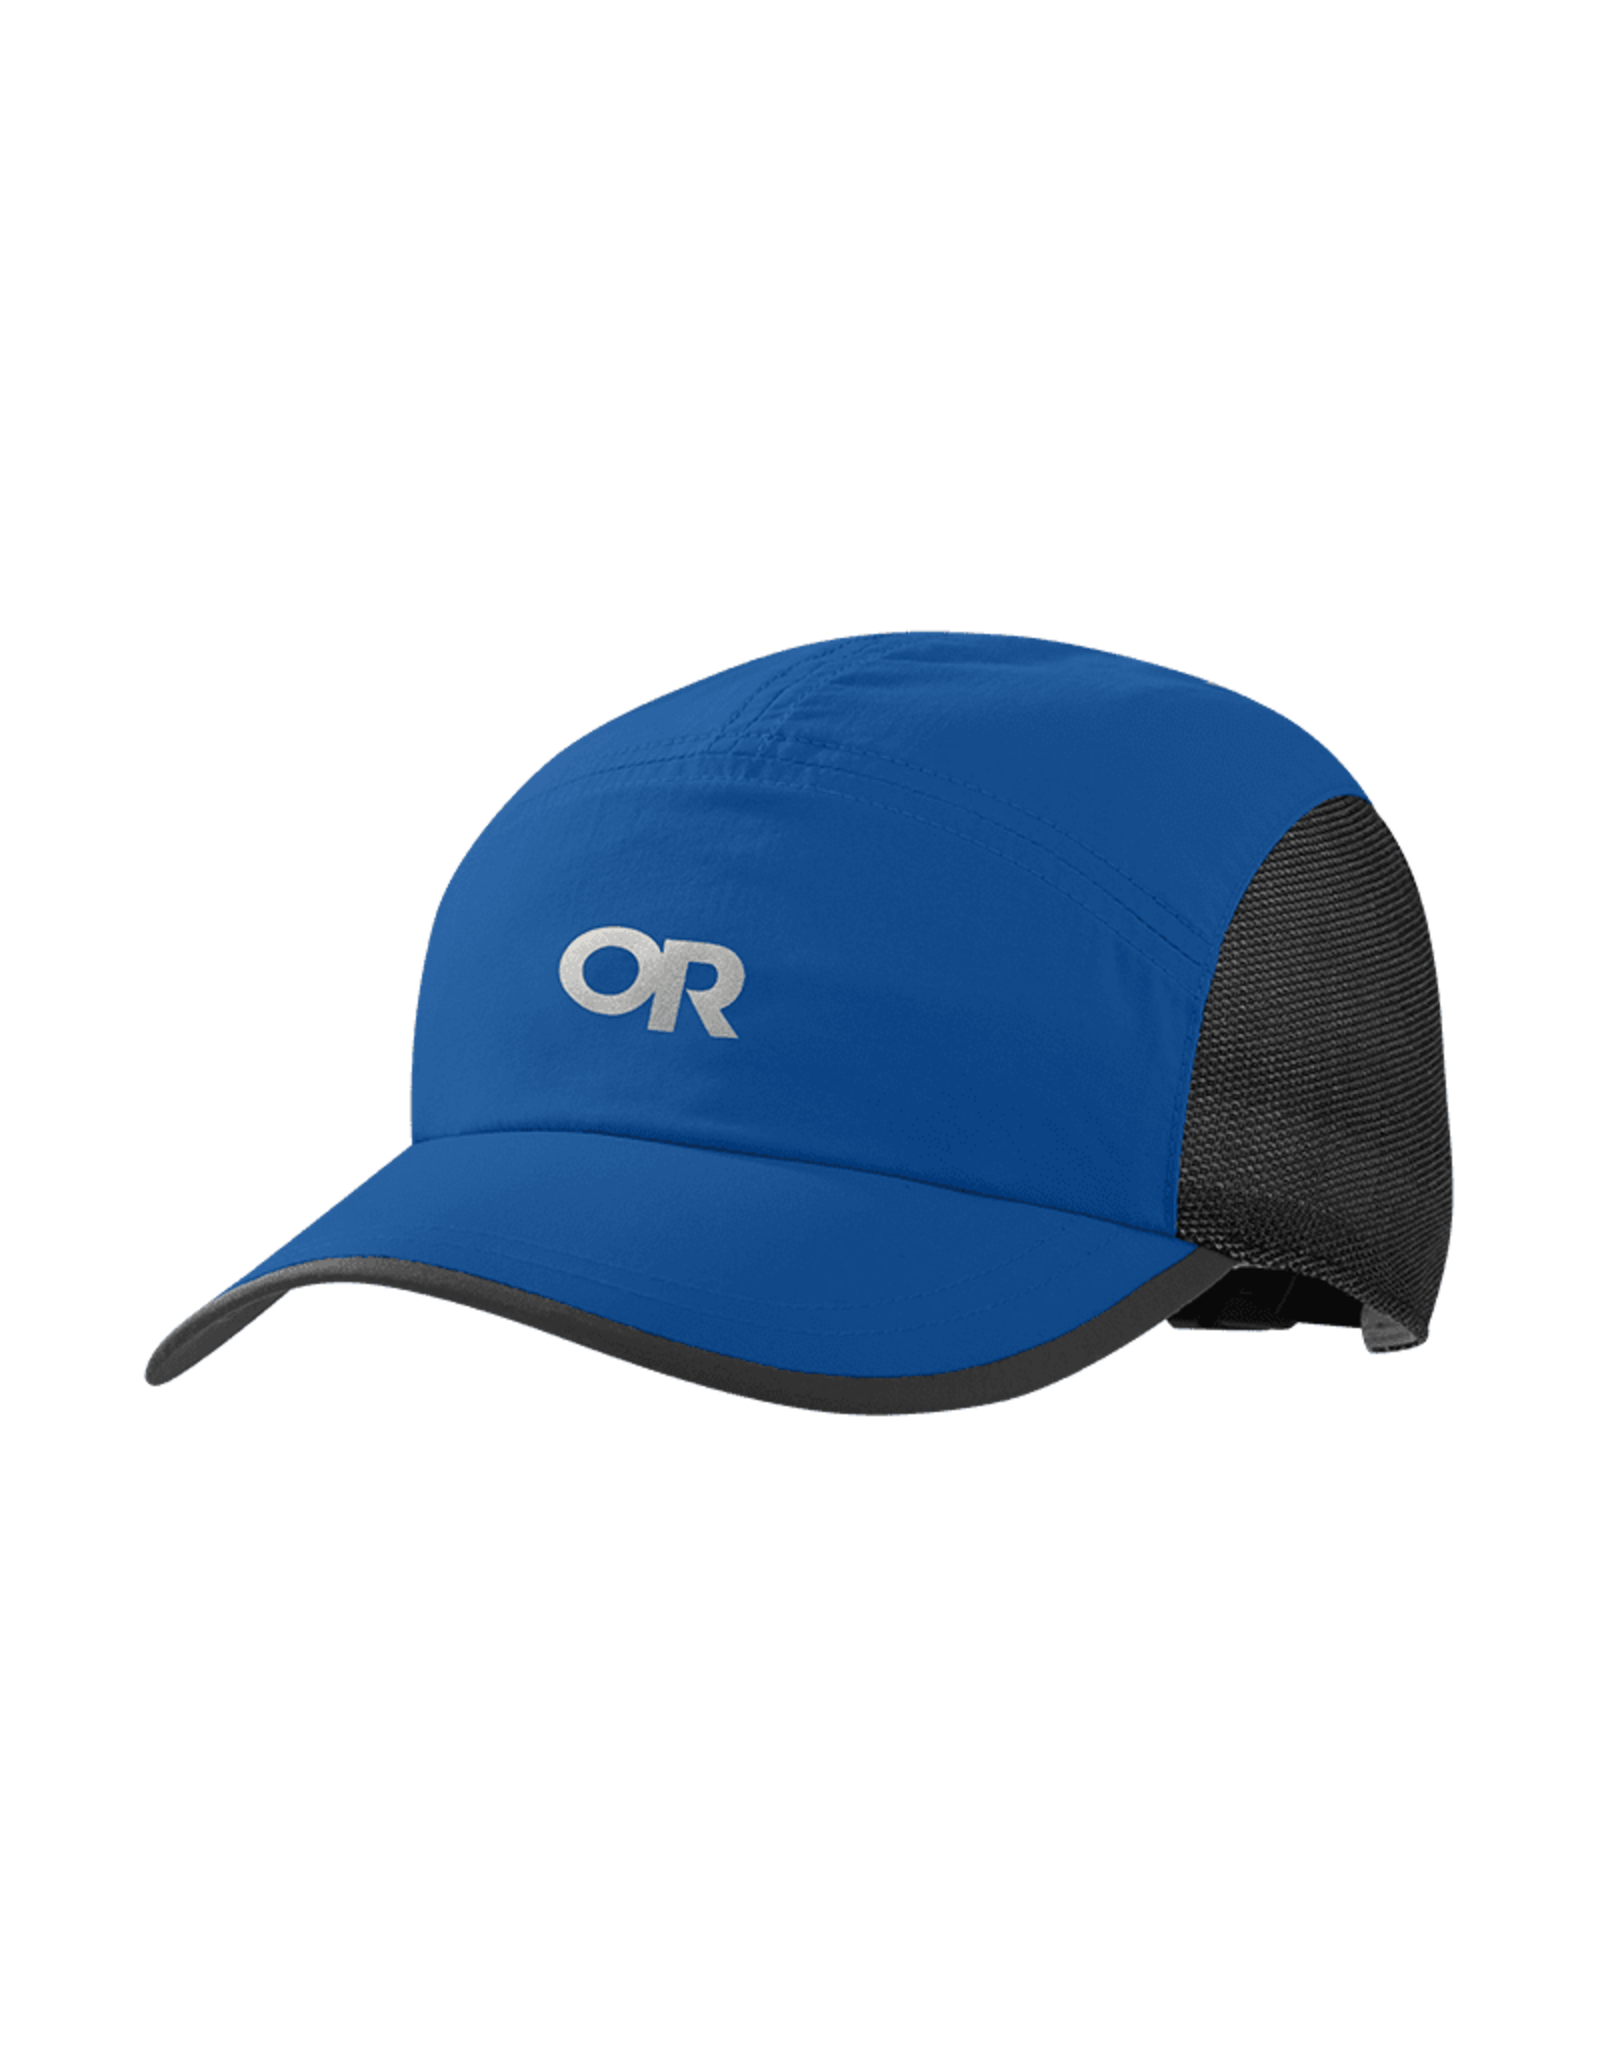 OUTDOOR RESEARCH SWIFT CAP